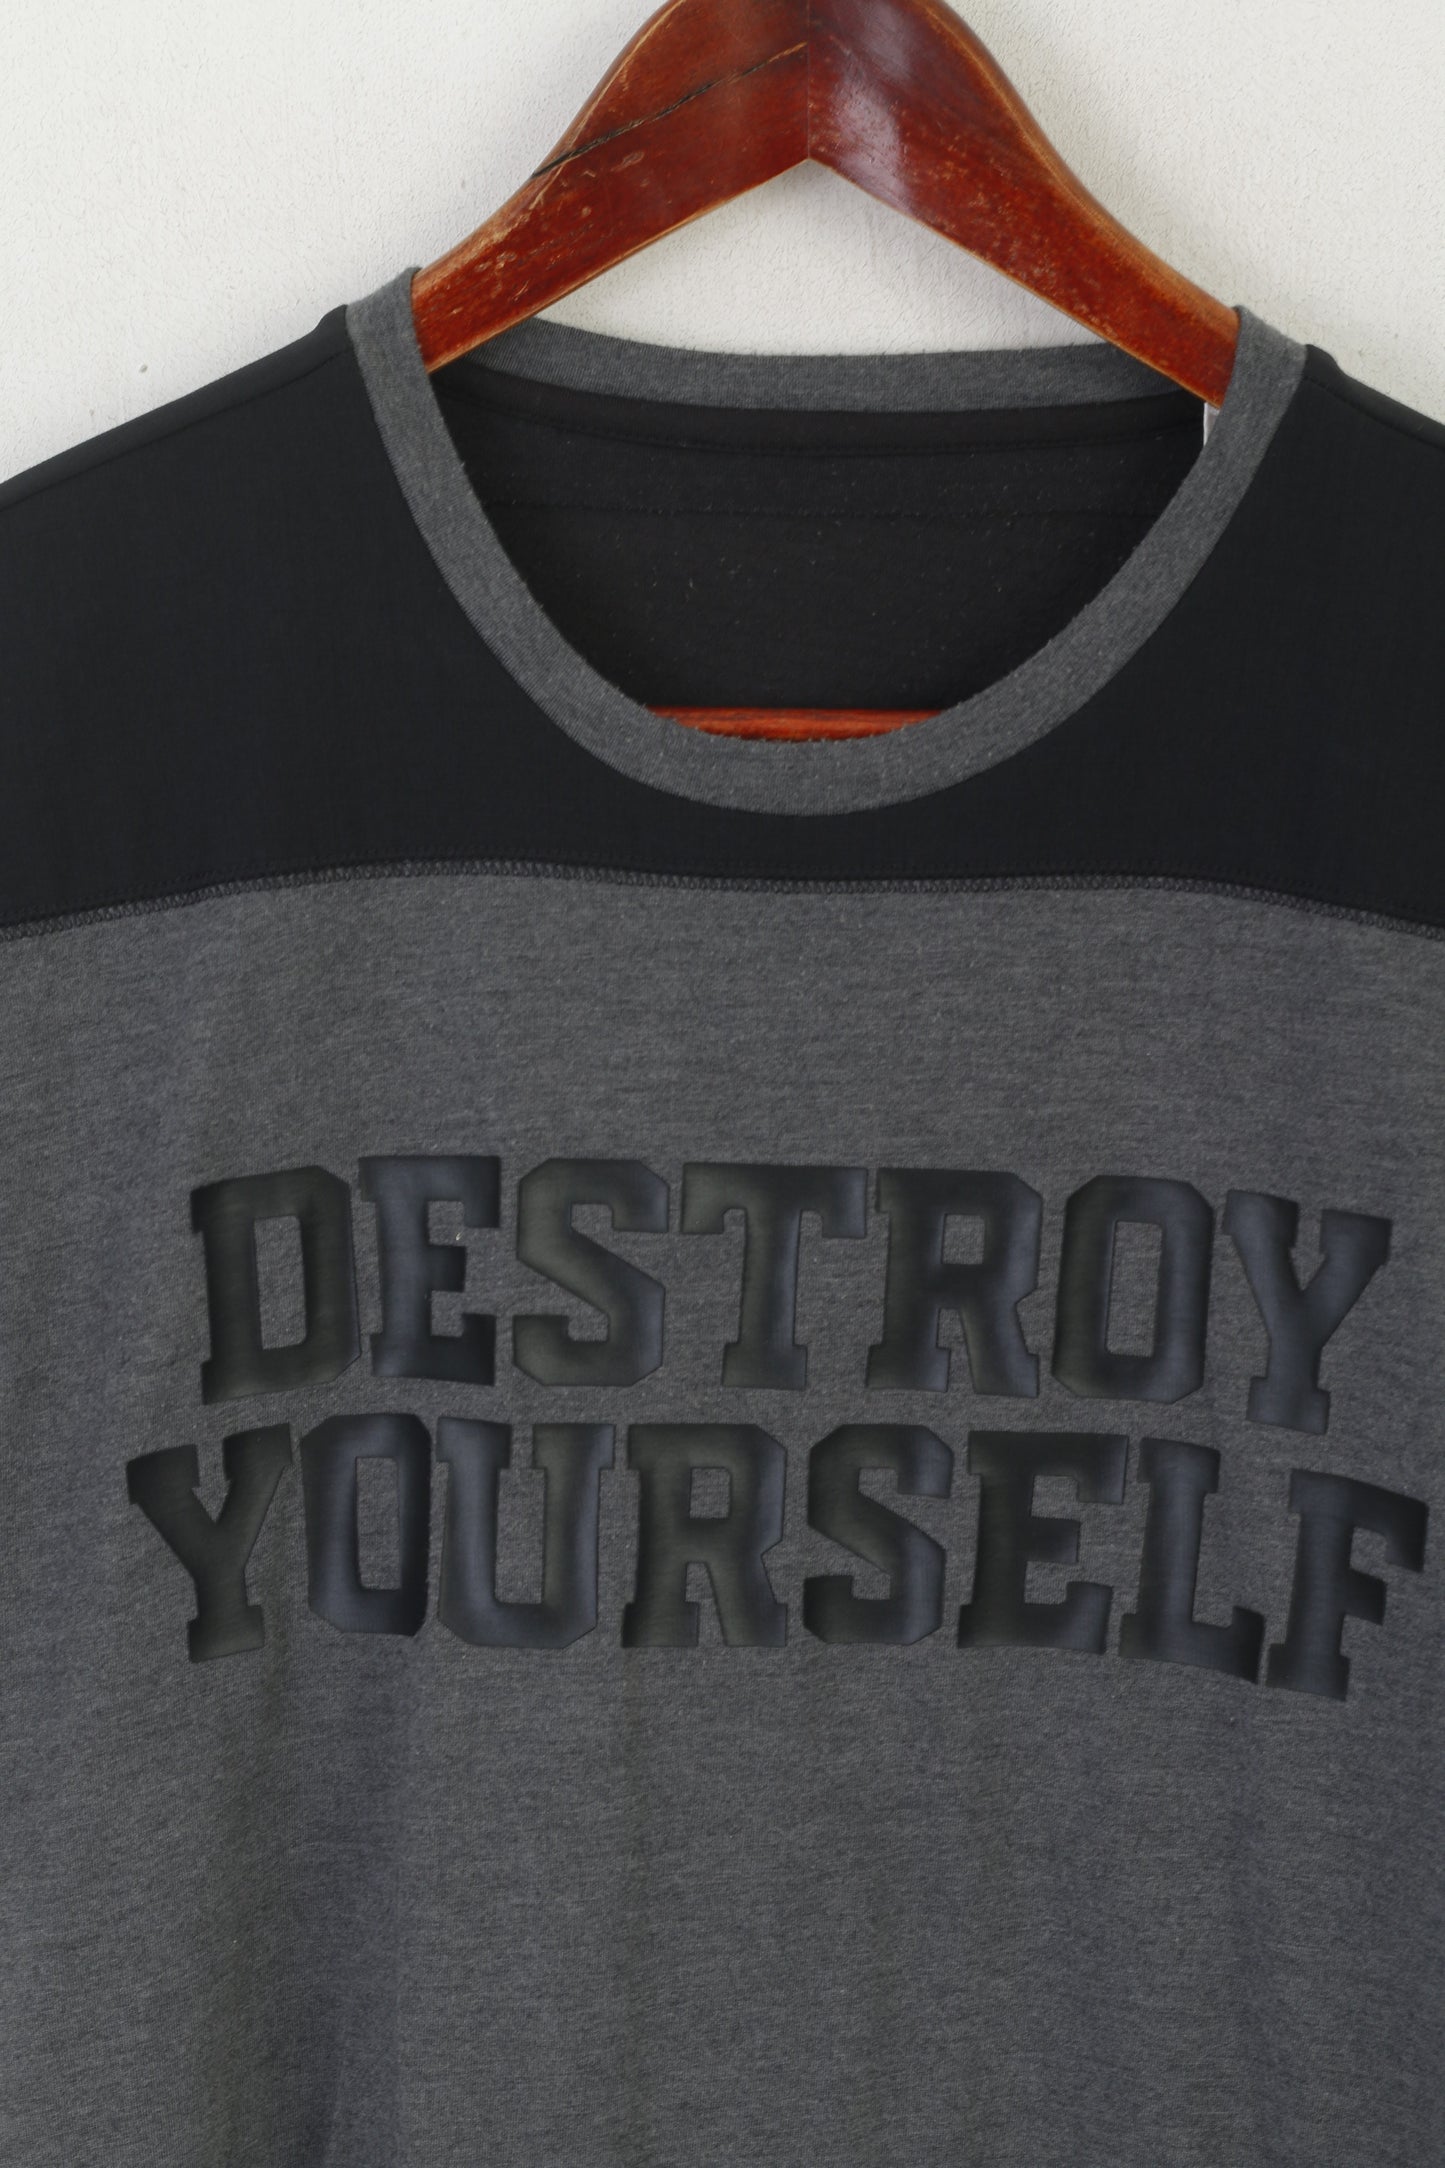 Adidas Men S Shirt Grey Destroy Yourself Climacool Sportswear Run Active Top